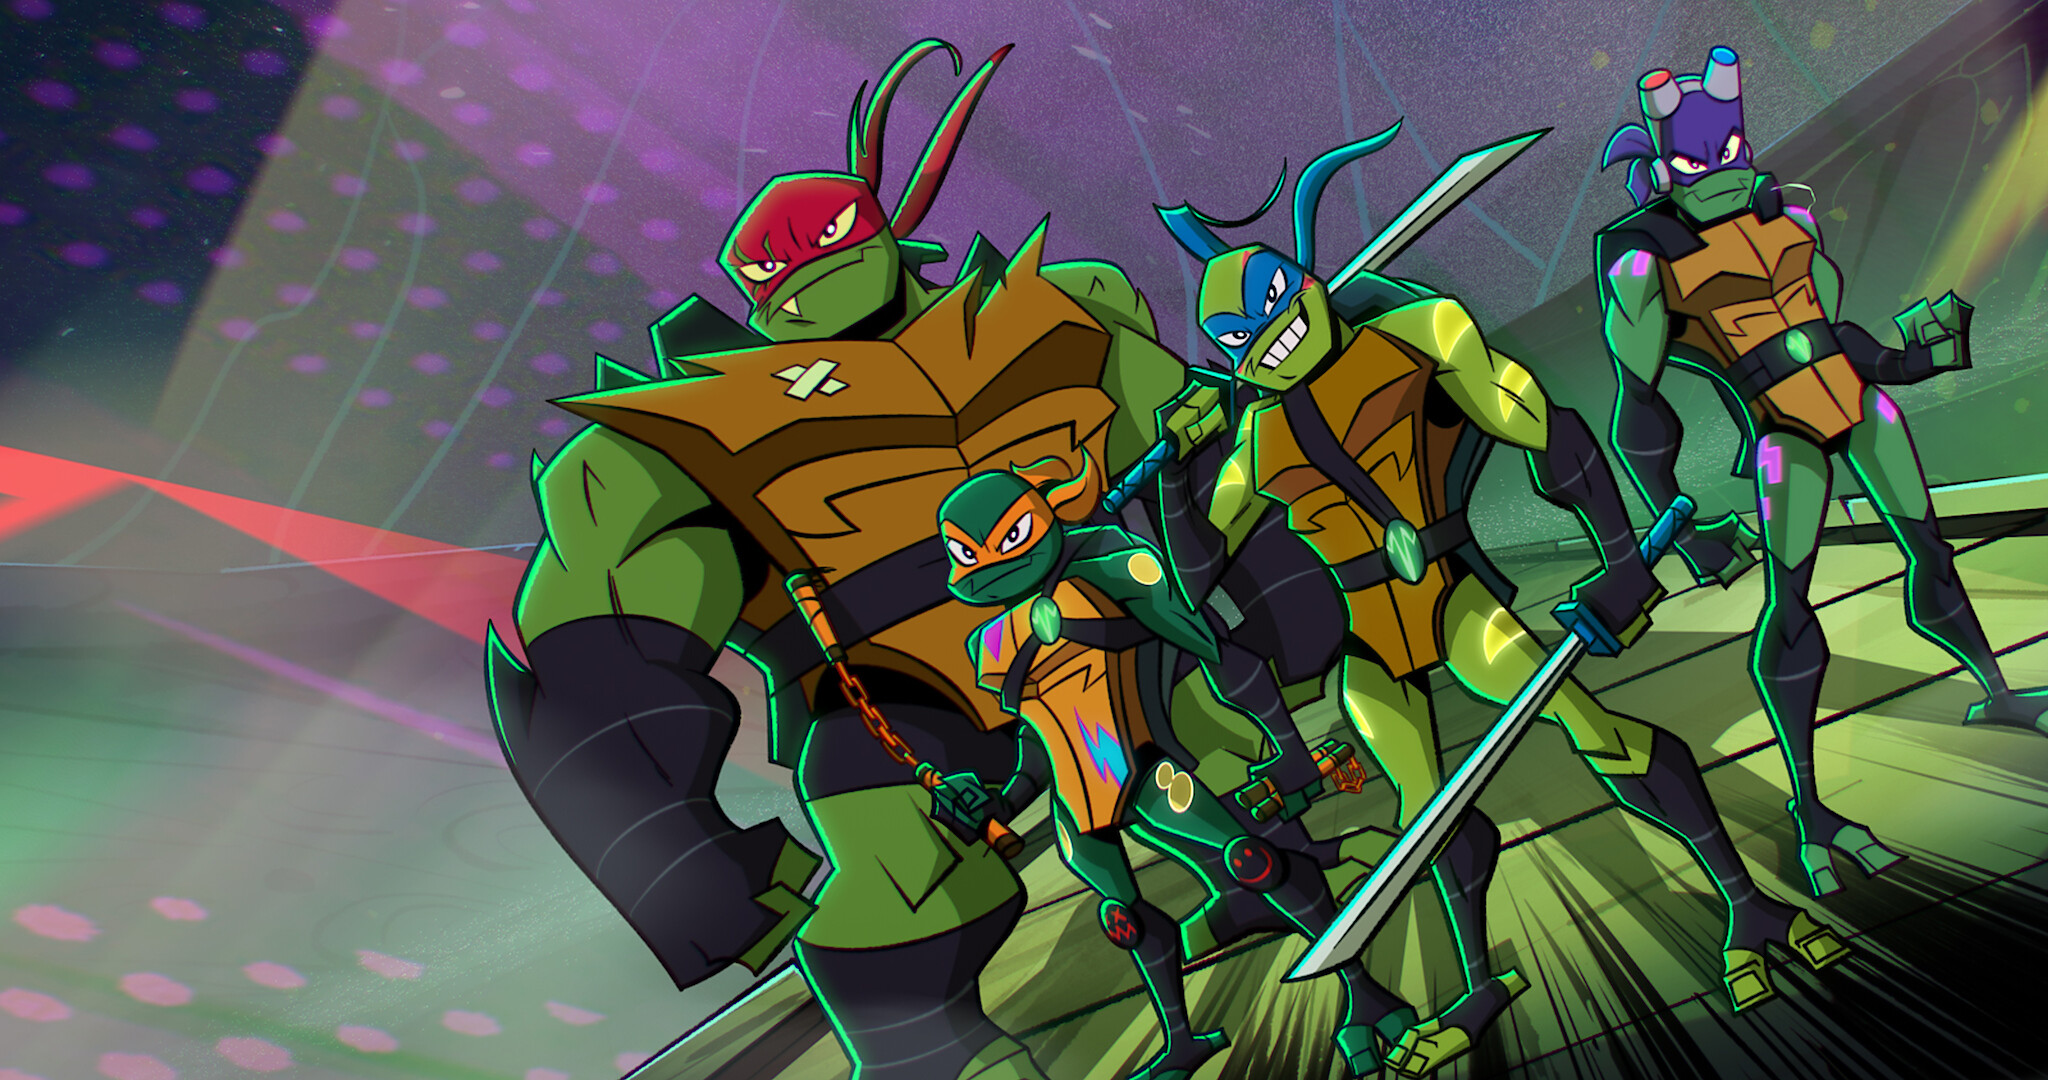 Rise of the Teenage Mutant Ninja Turtles The Movie Cast Guide image